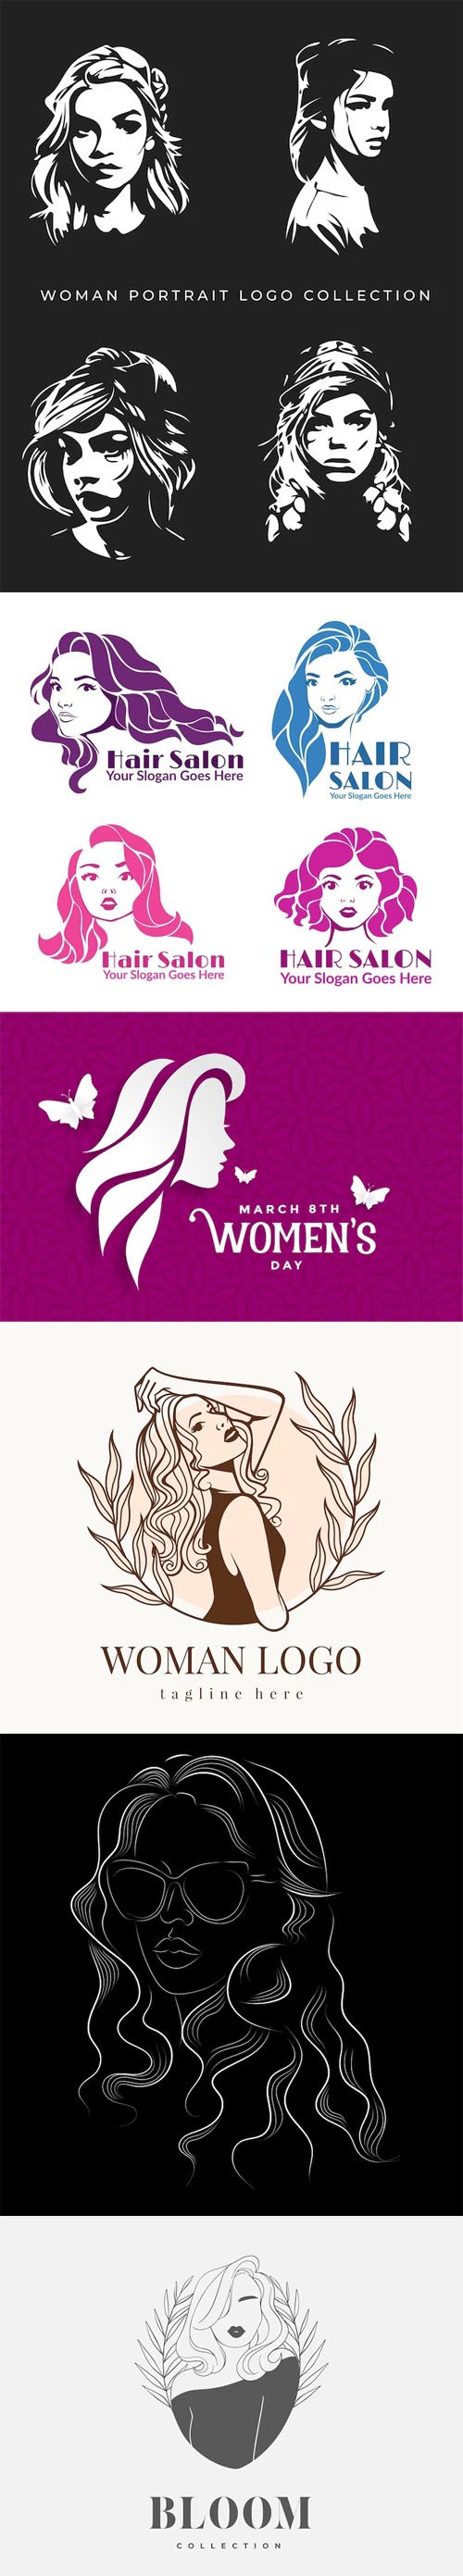 Woman Portrait Logos - Vector Design Templates Collection